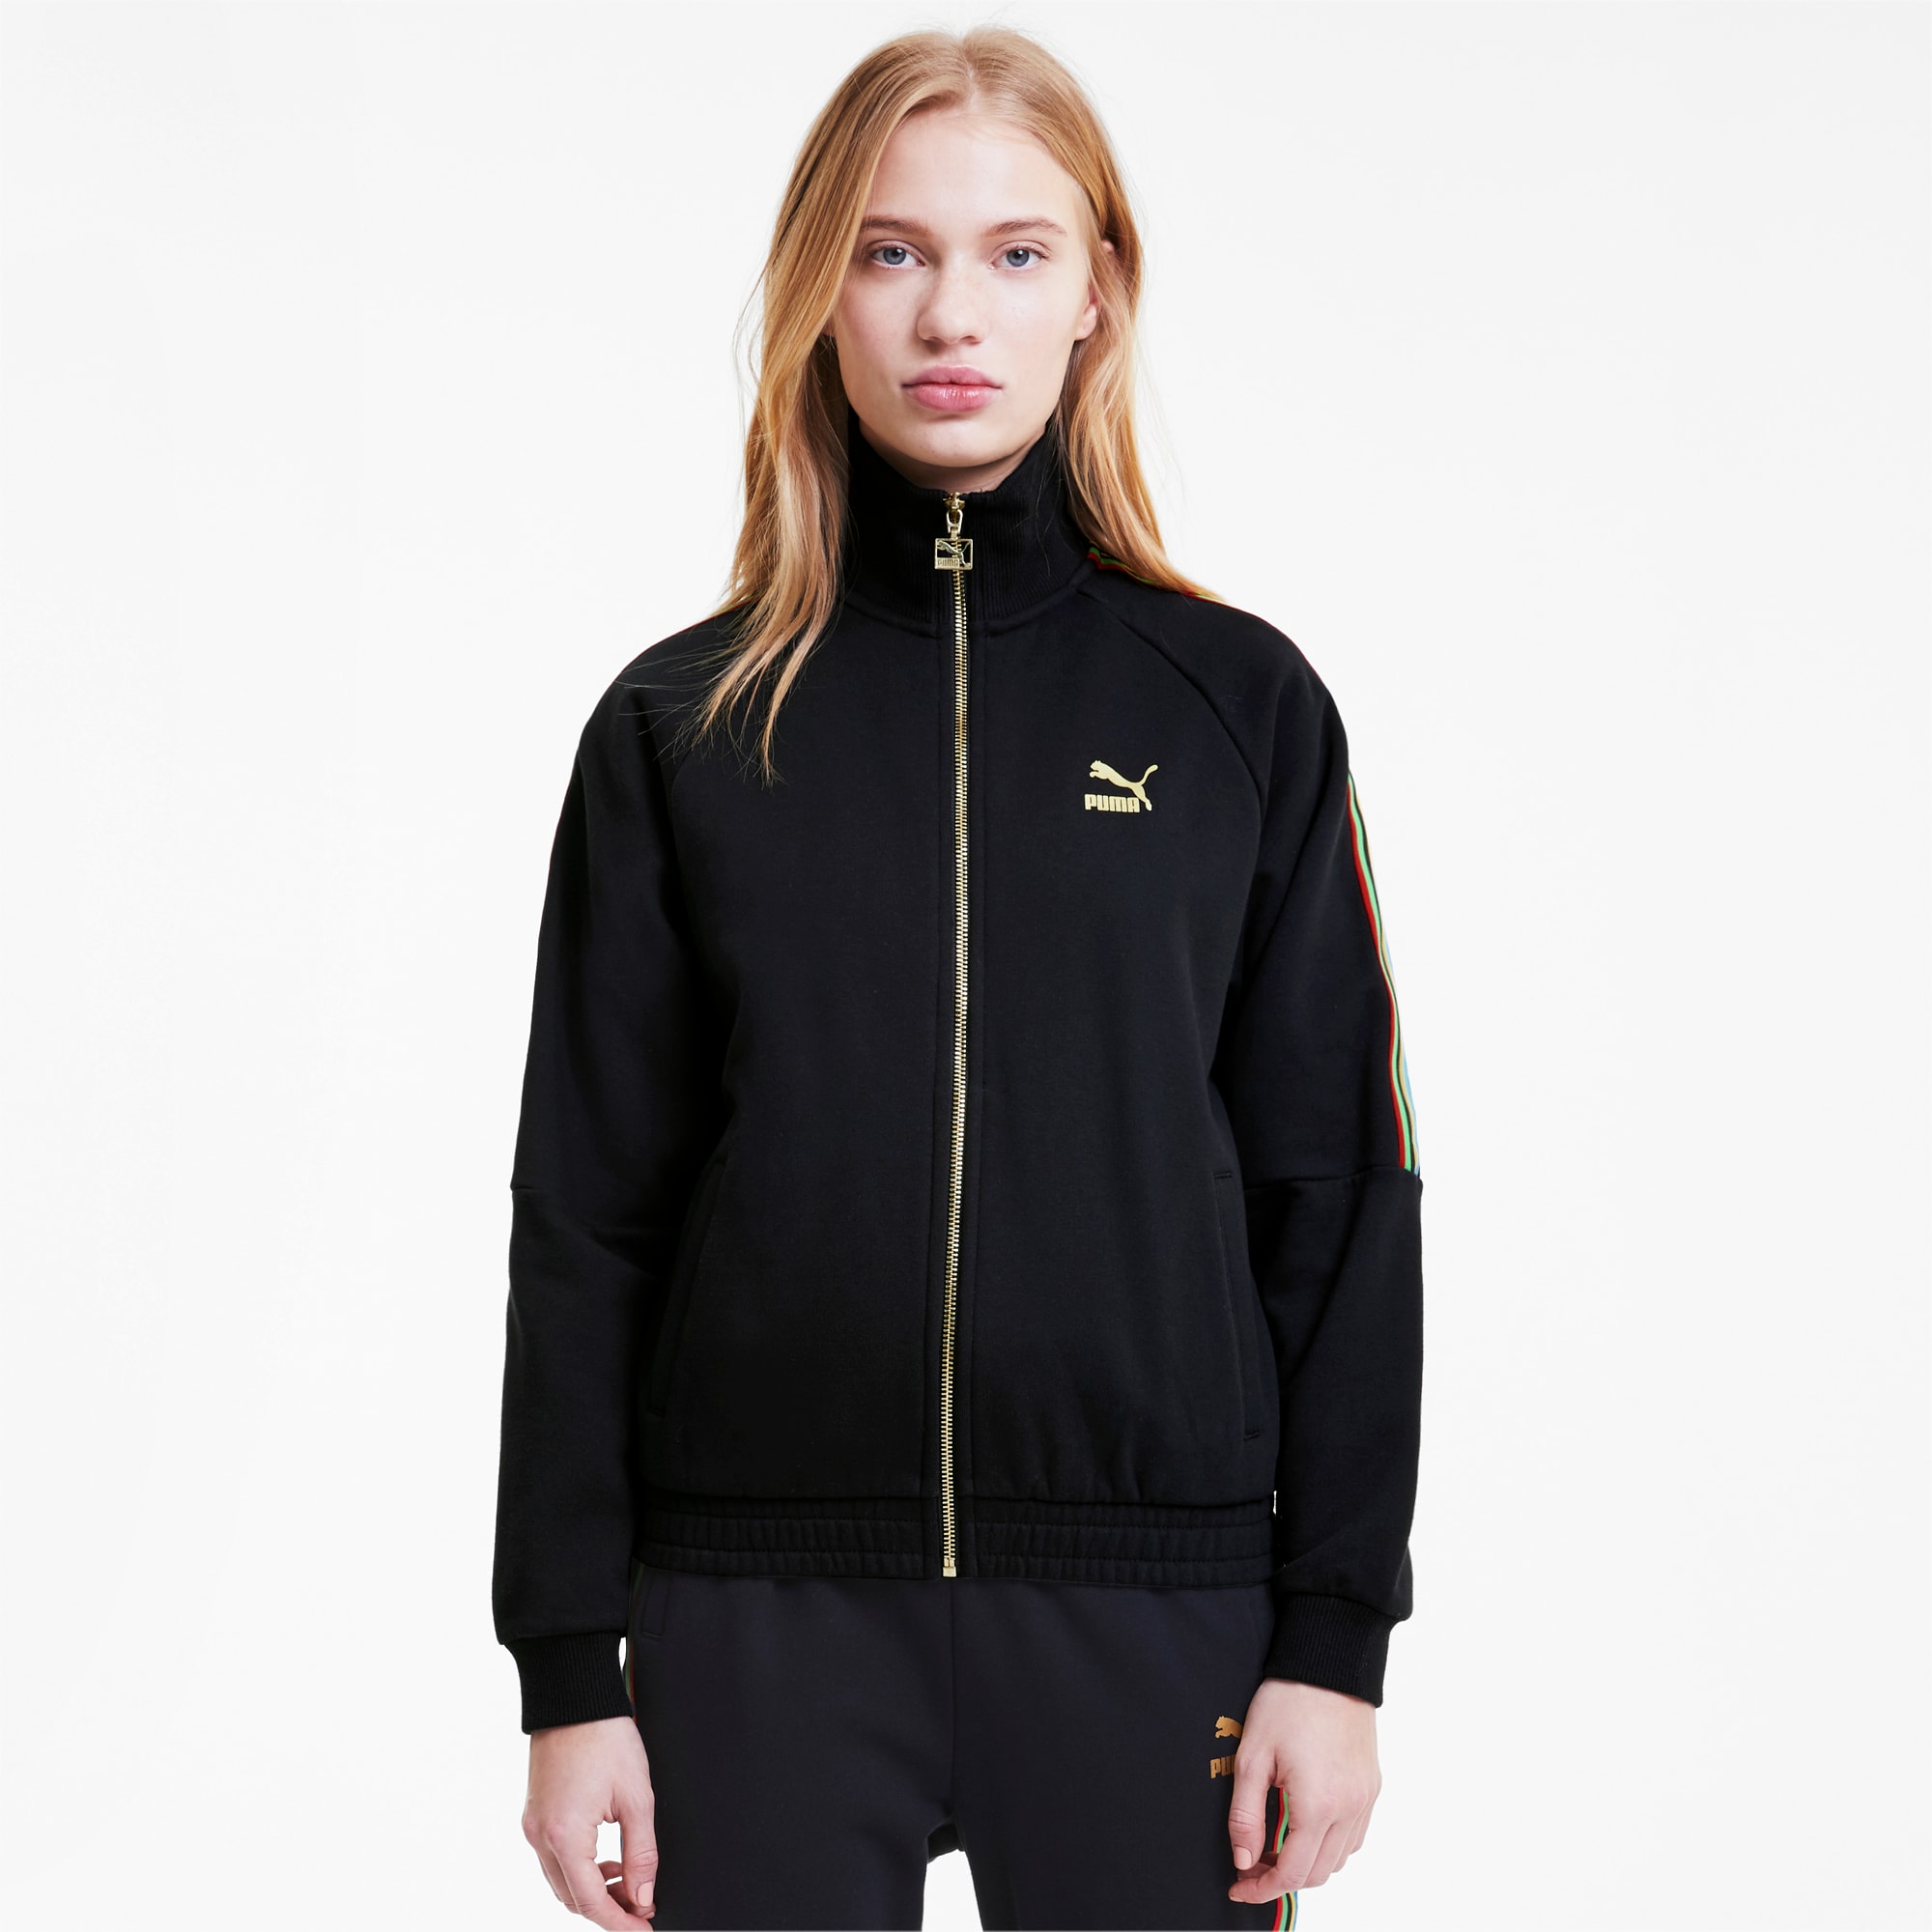 black and gold puma jacket